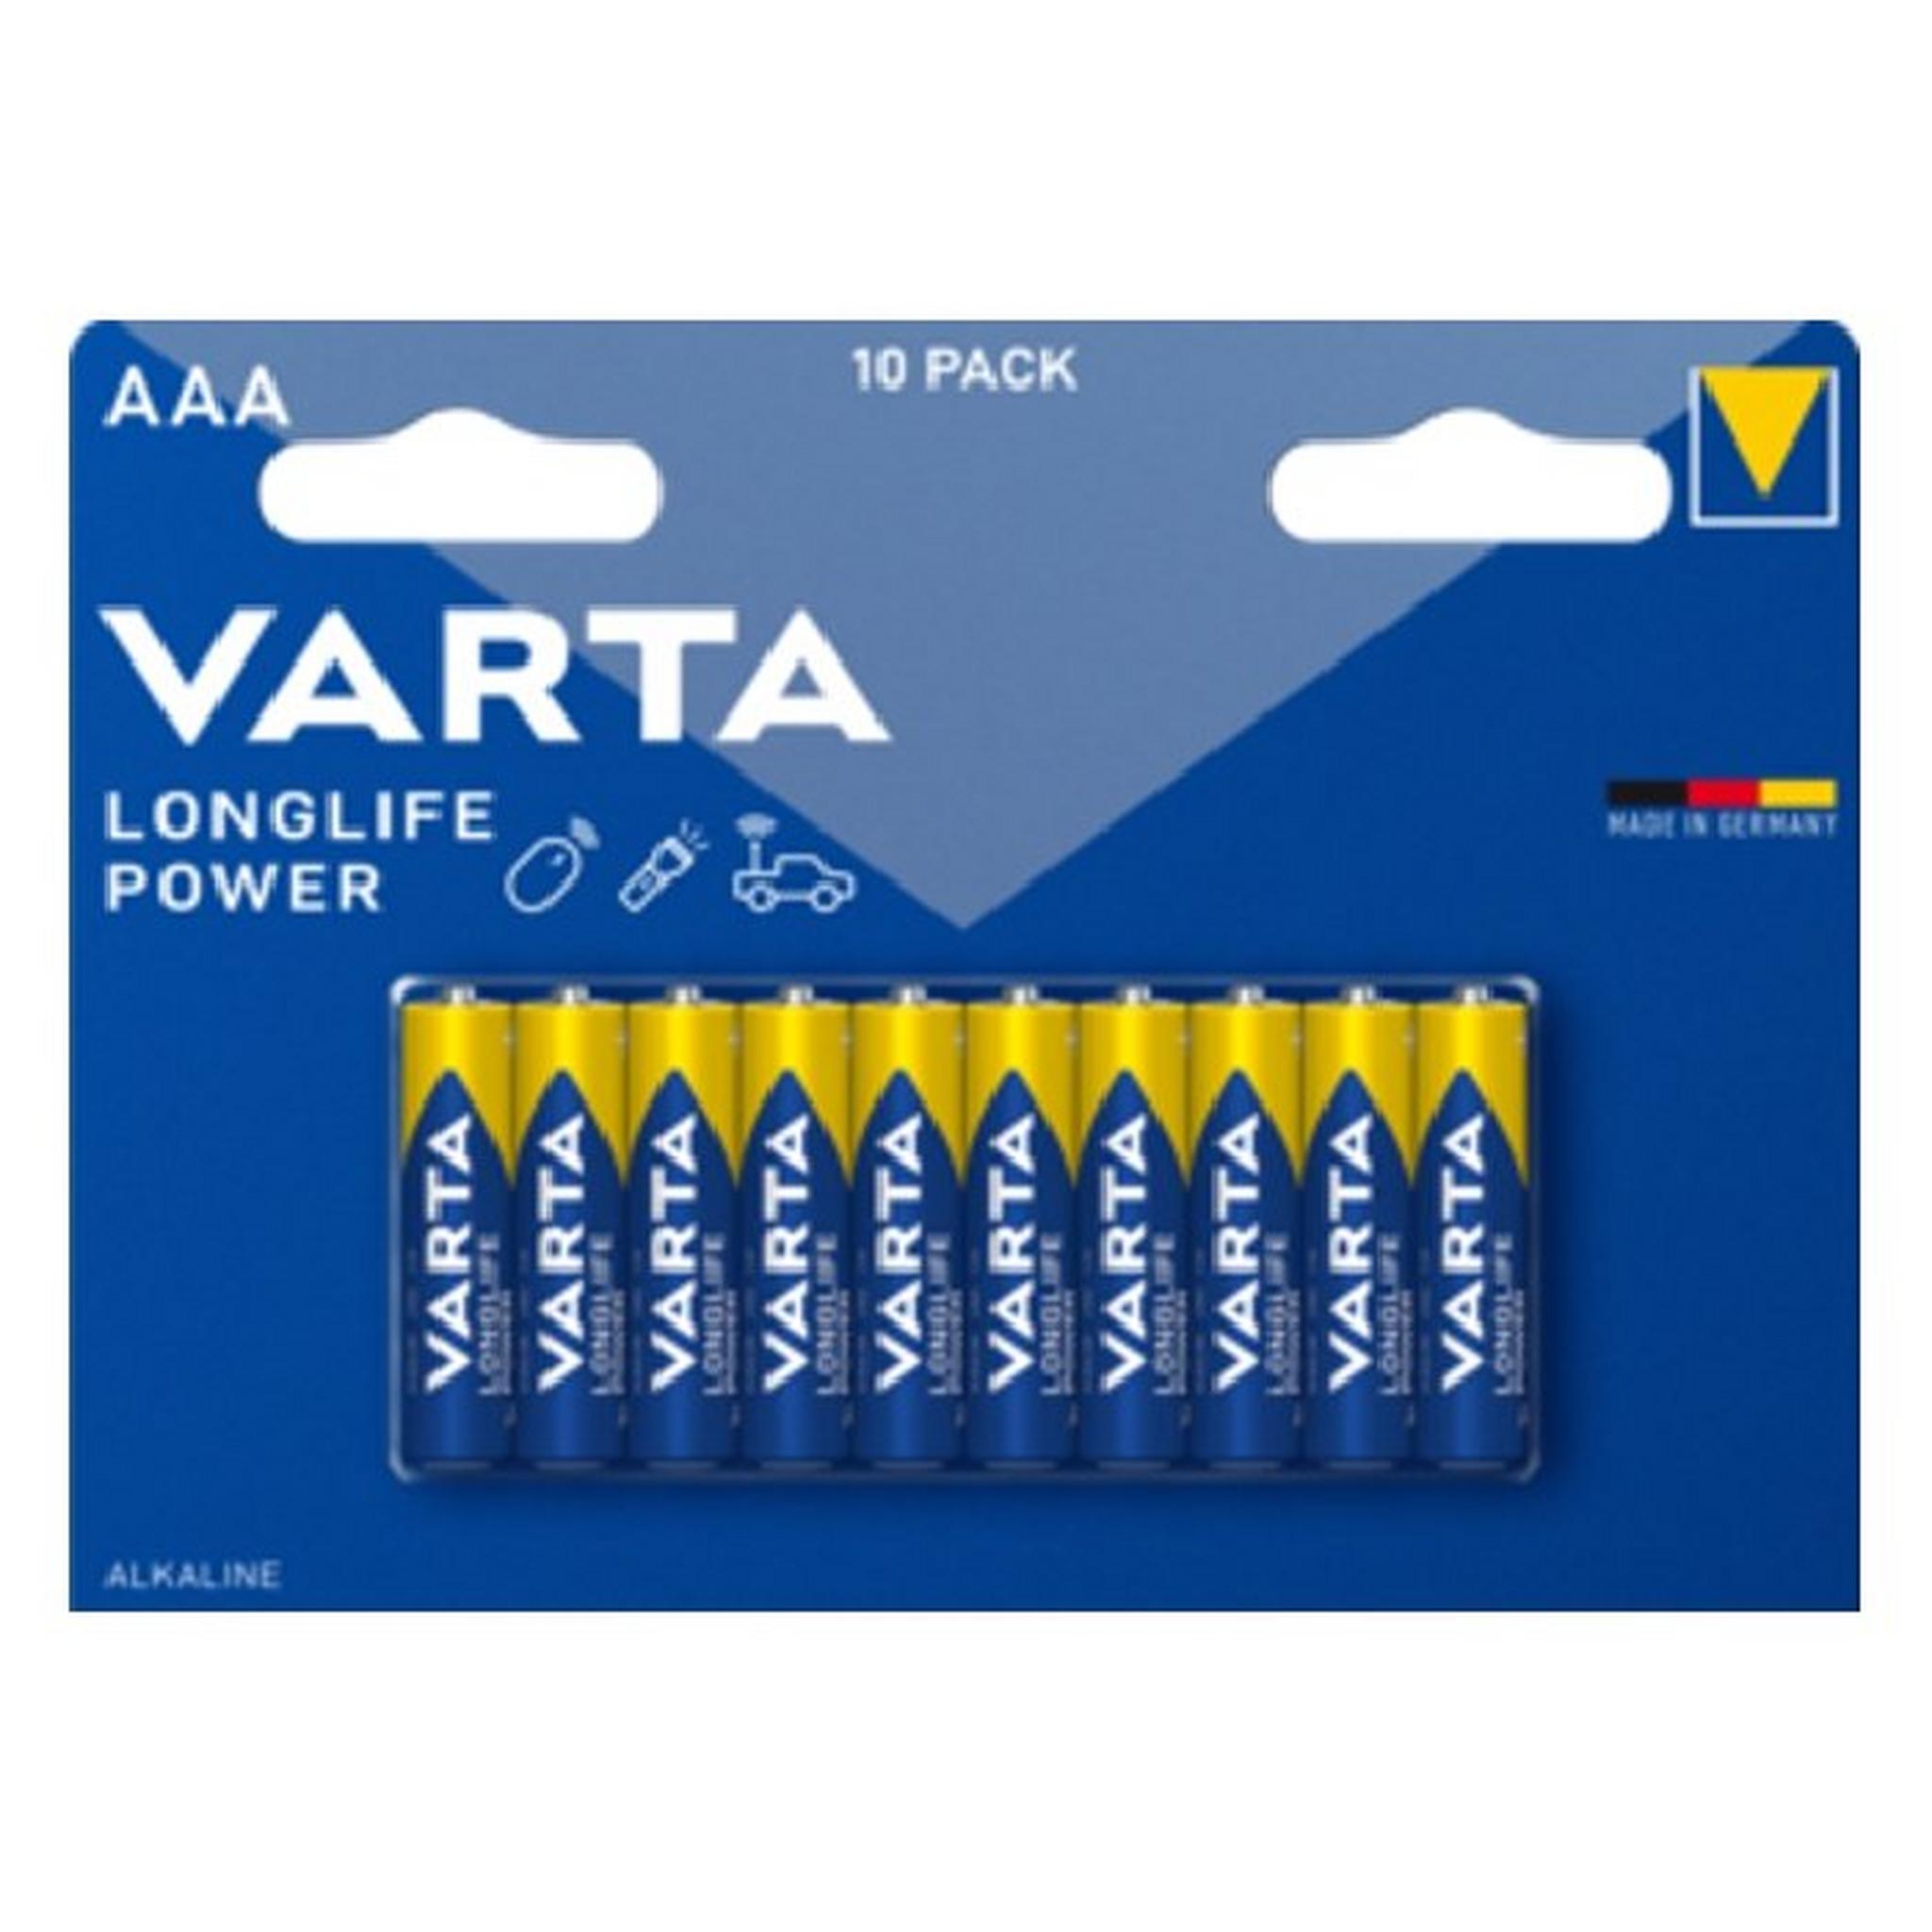 Varta Longlife Power AAA Blister 10 Pcs Battery